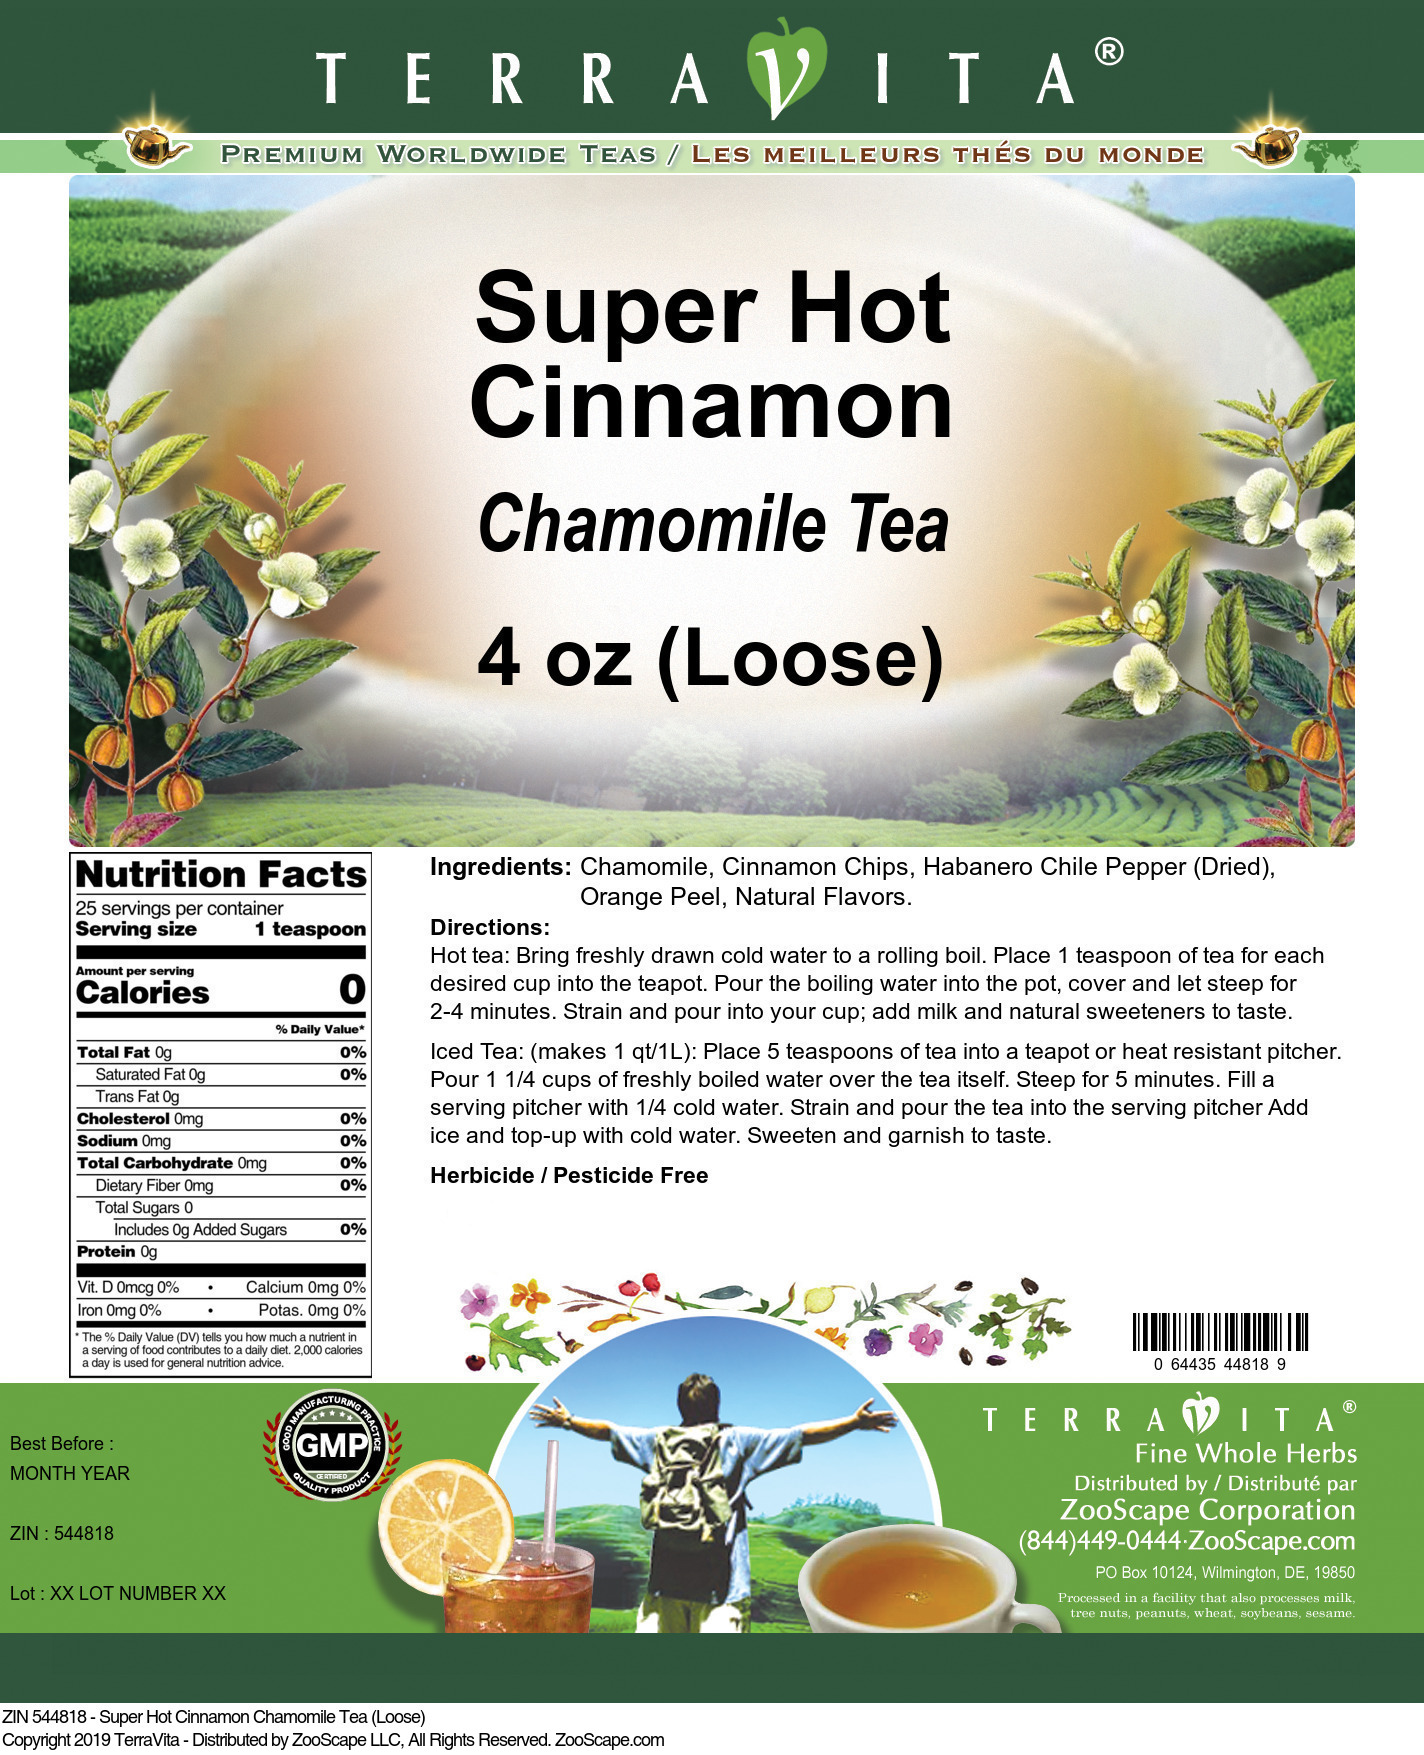 Super Hot Cinnamon Chamomile Tea (Loose) - Label